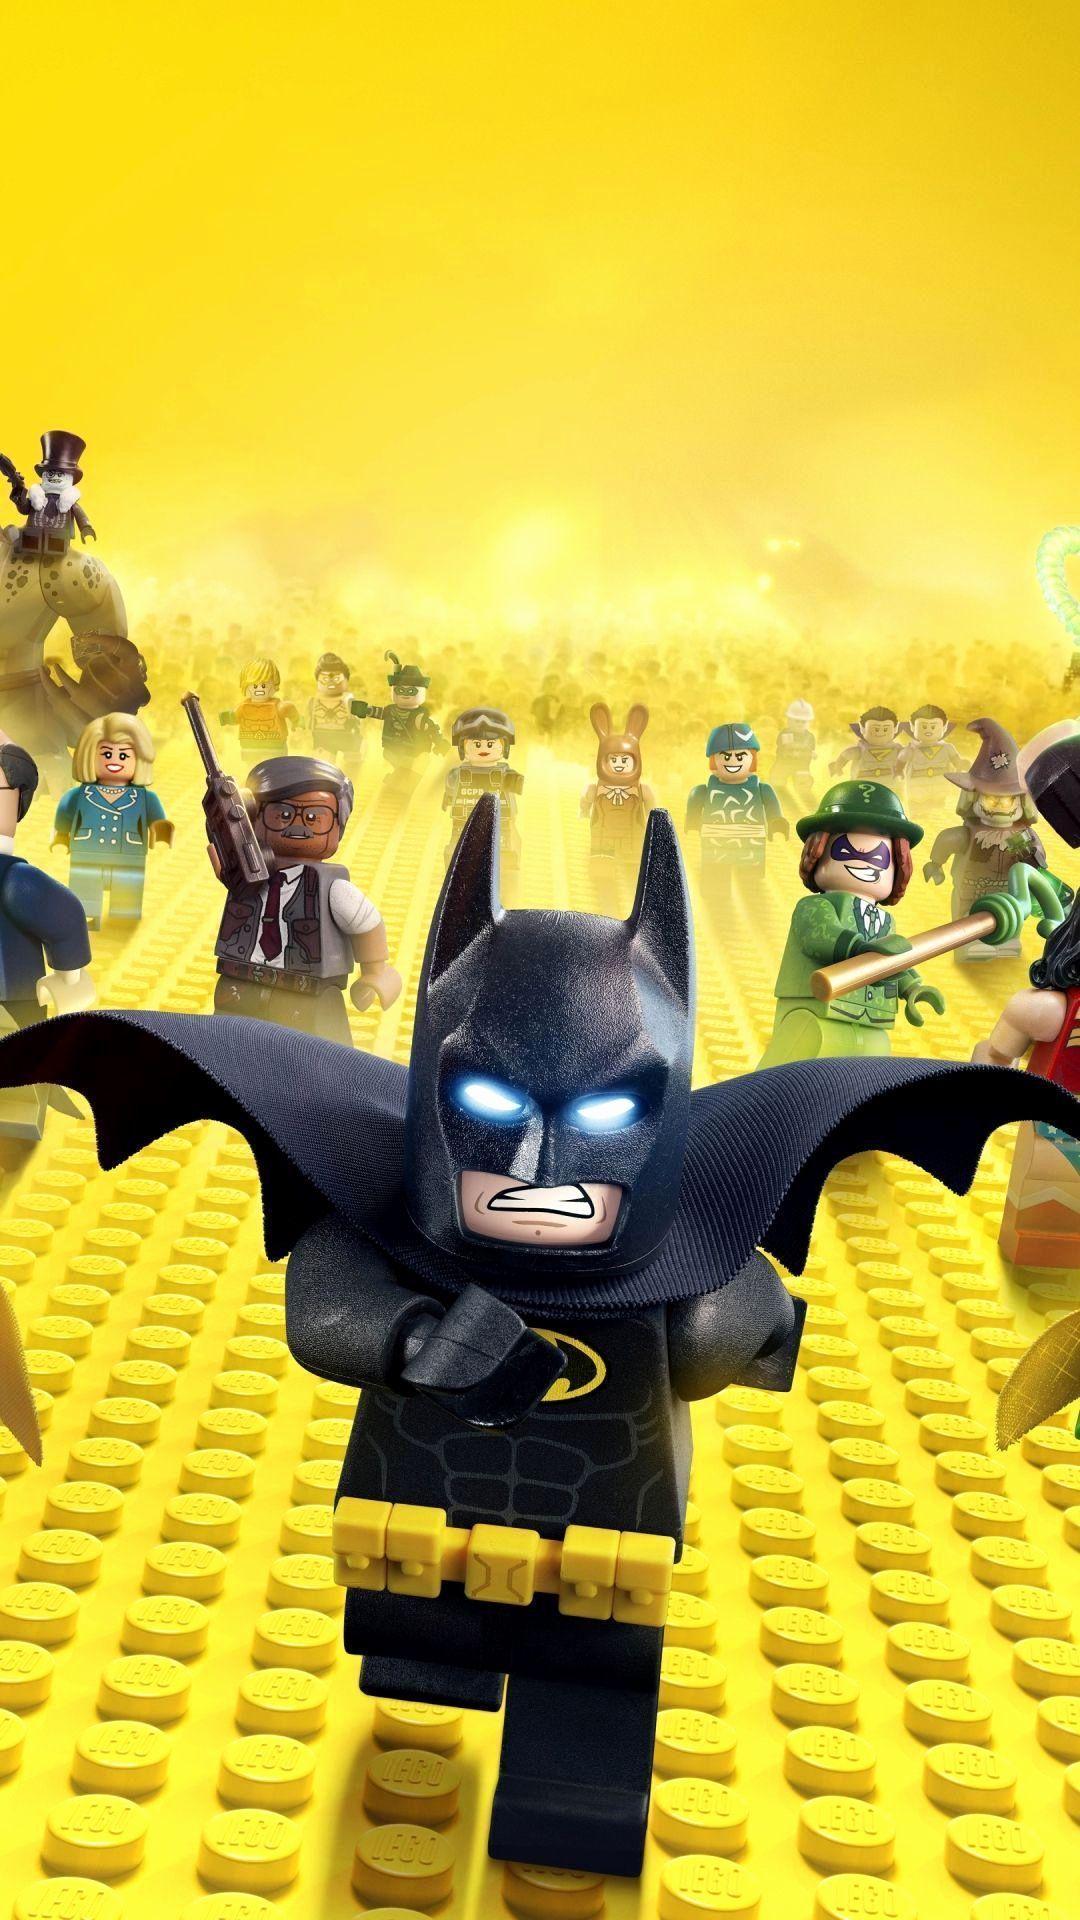 Lego Ninjago Iphone Wallpapers Top Free Lego Ninjago Iphone Backgrounds Wallpaperaccess